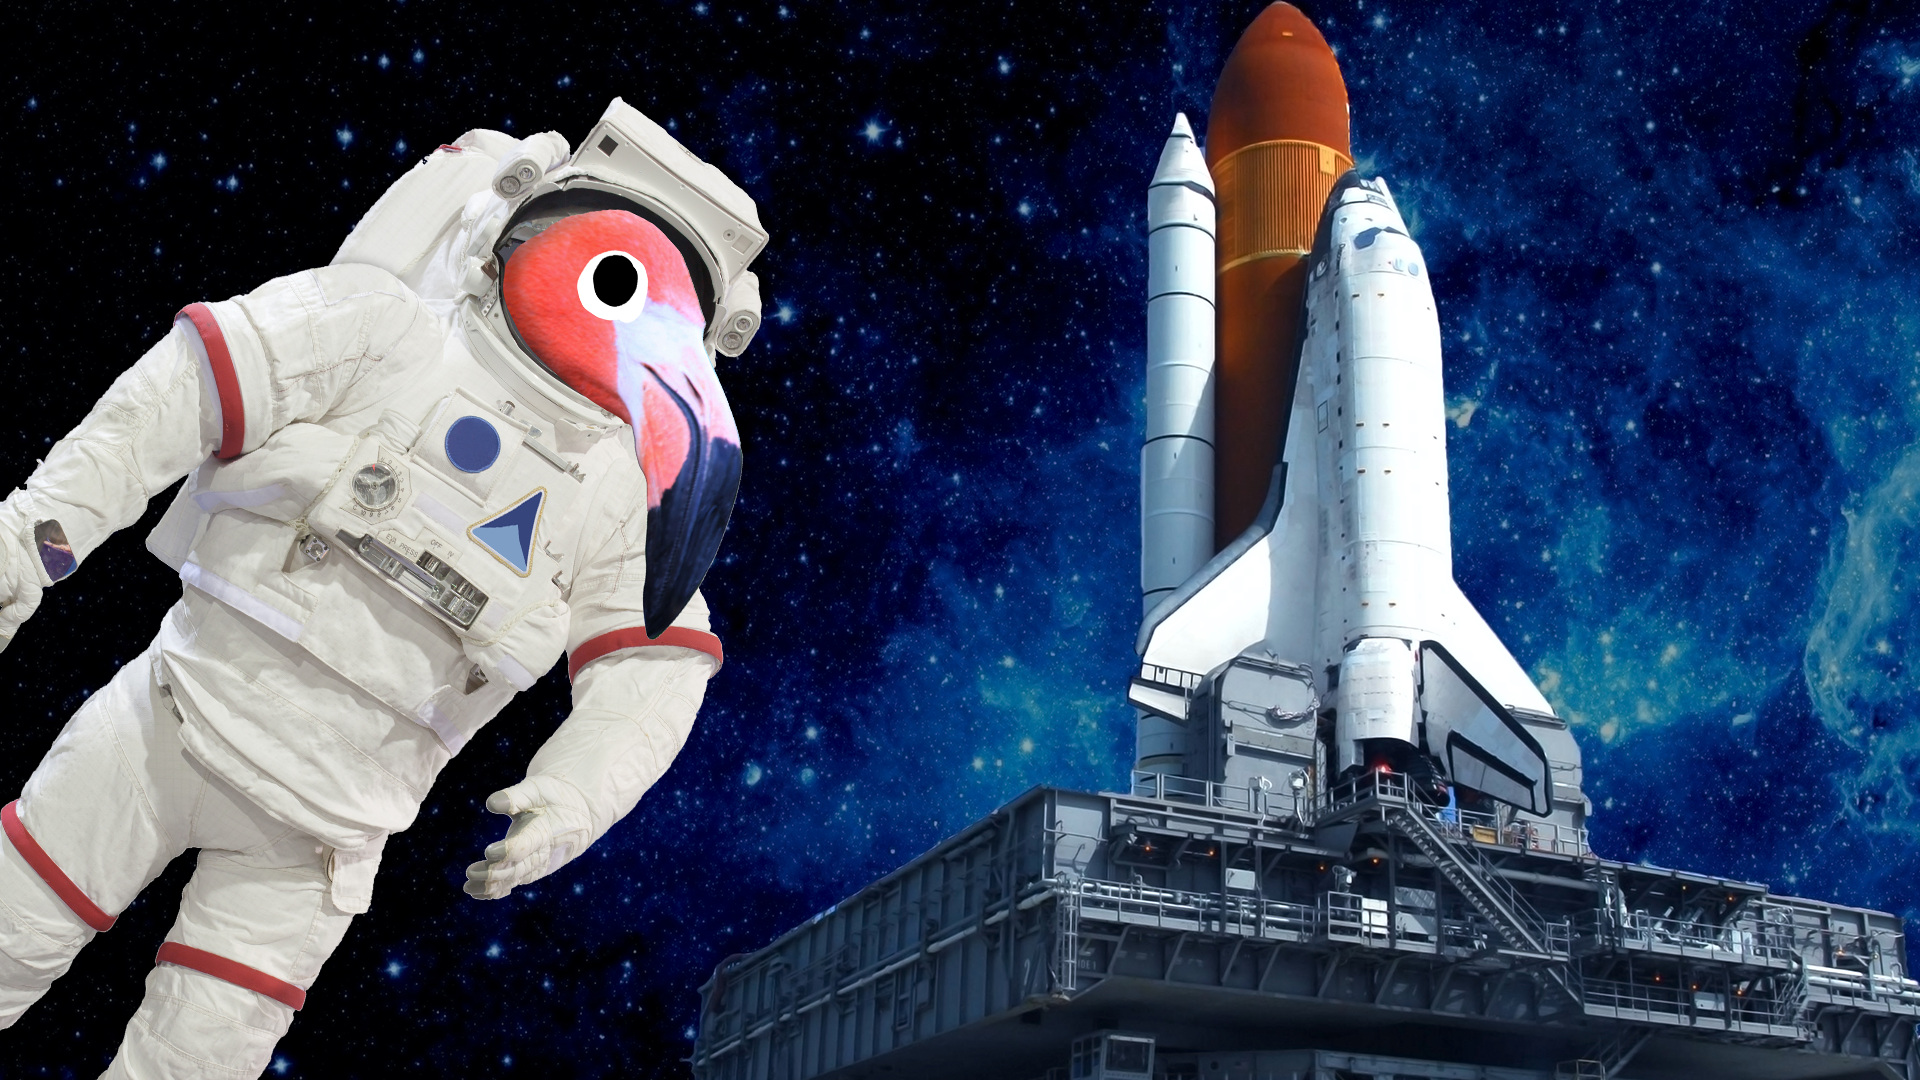 A flamingo astronaut with rocket